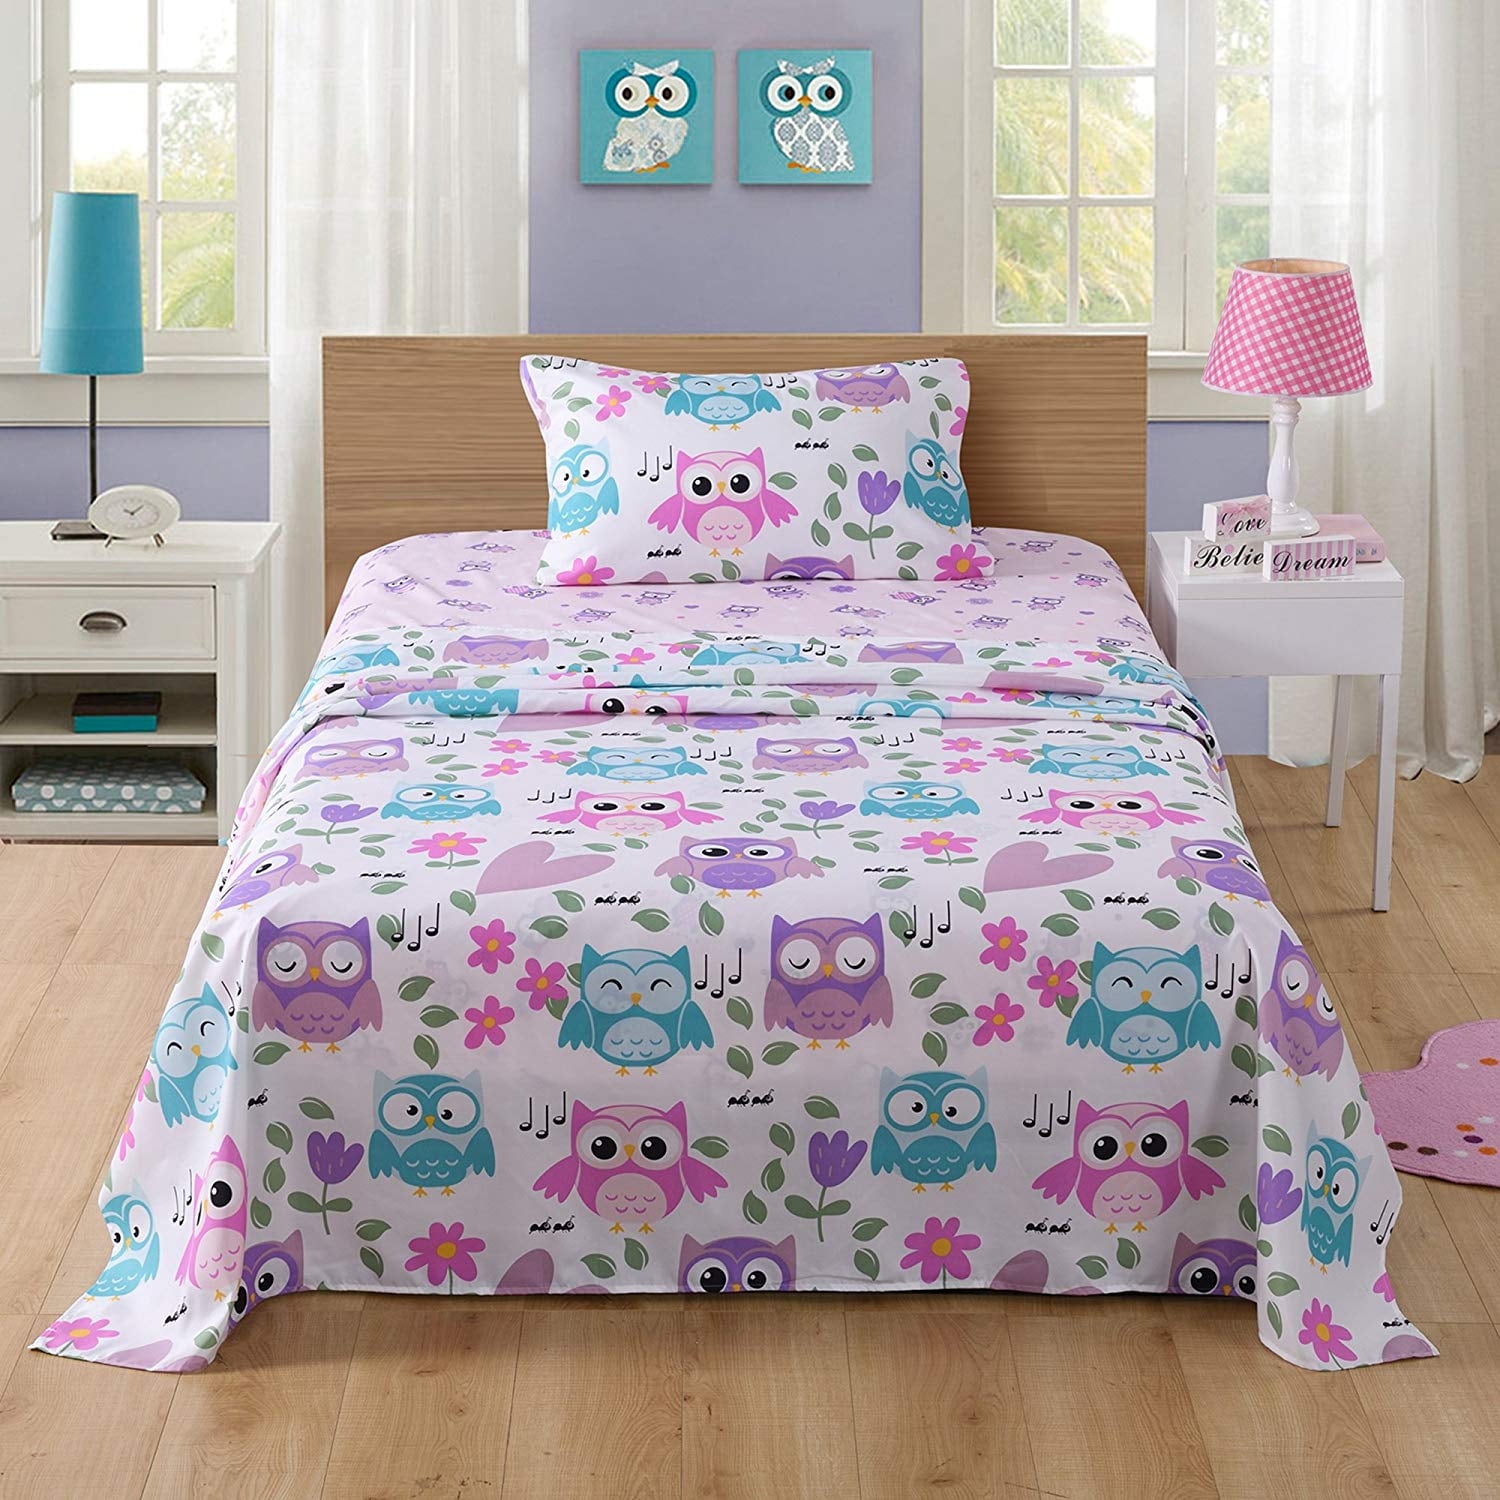 Bed Sheets for Kids Girls Boys Teens Children Beds Set Elephant Sheet 